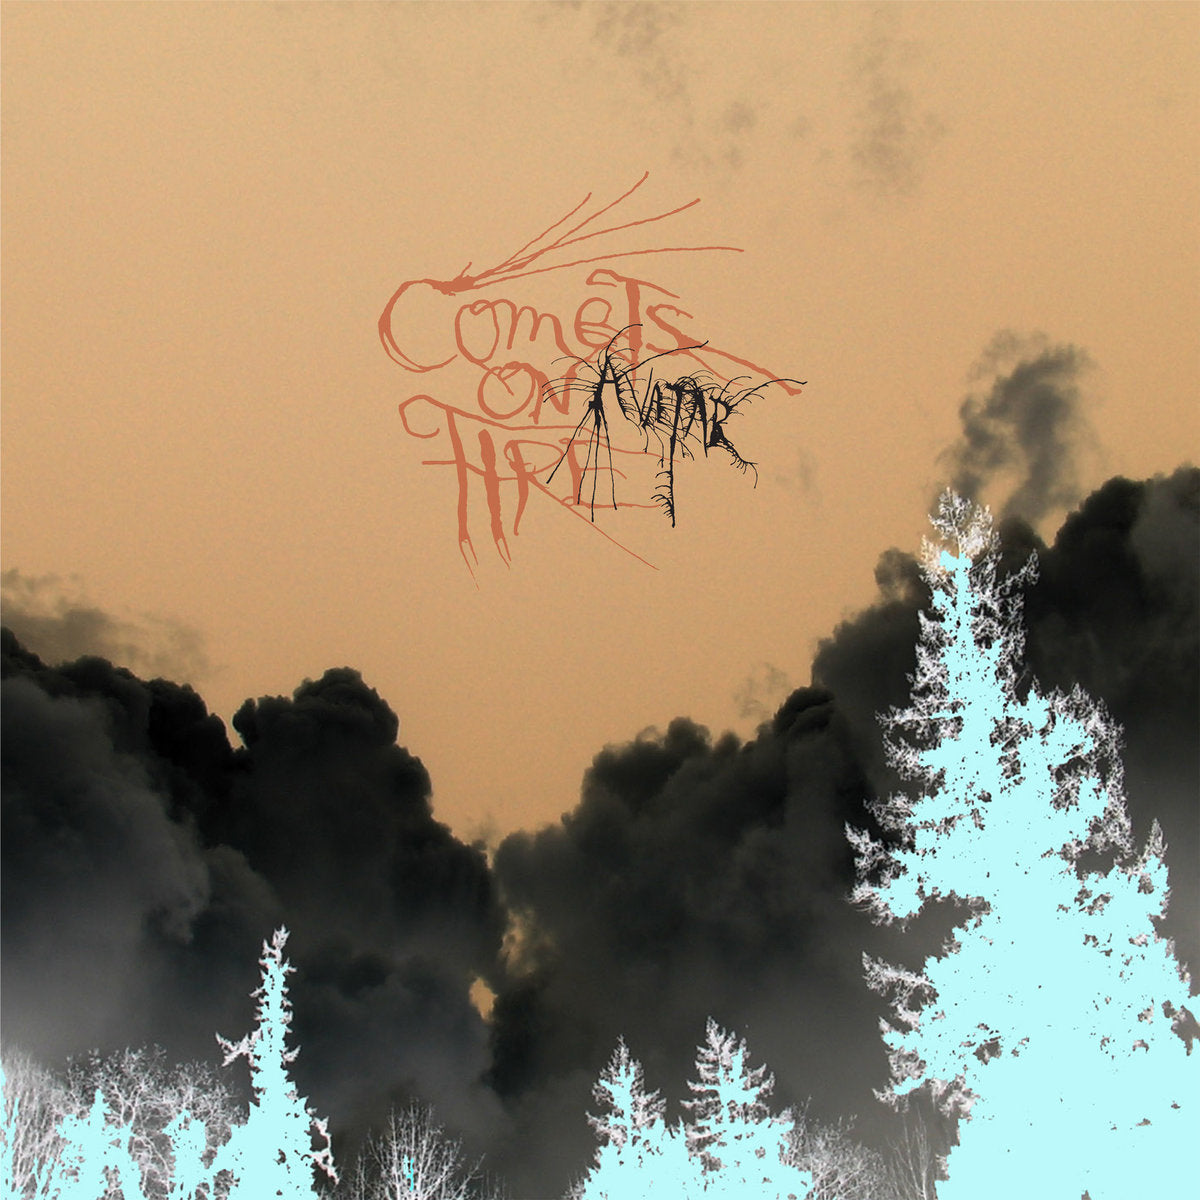 Comets on Fire - Avatar LP (Ltd Loser Edition)